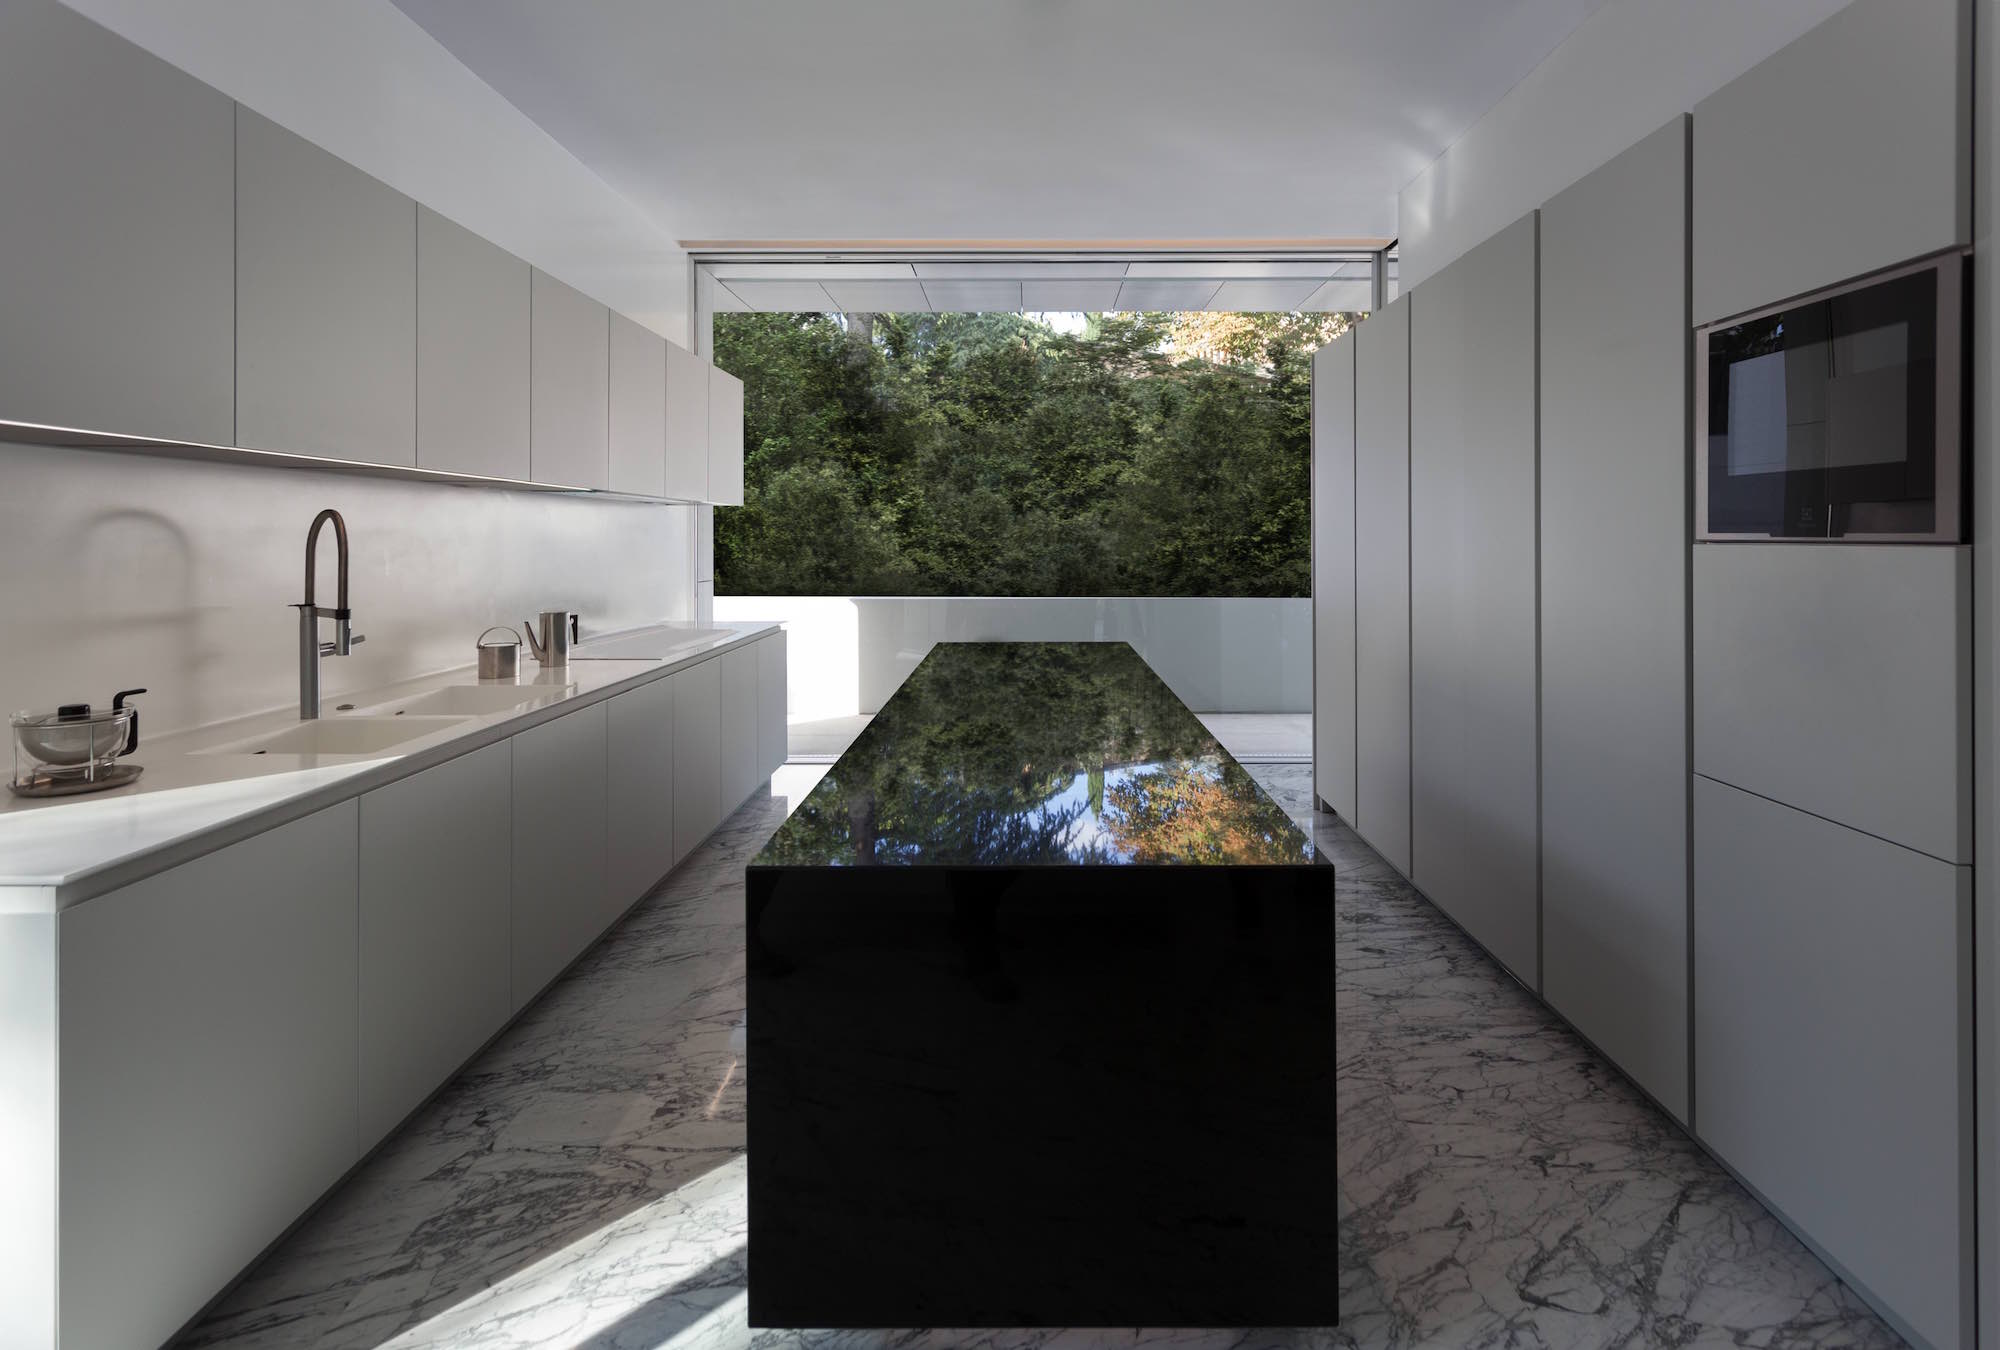 Casa de Aluminio by Fran Silvestre Arquitectos